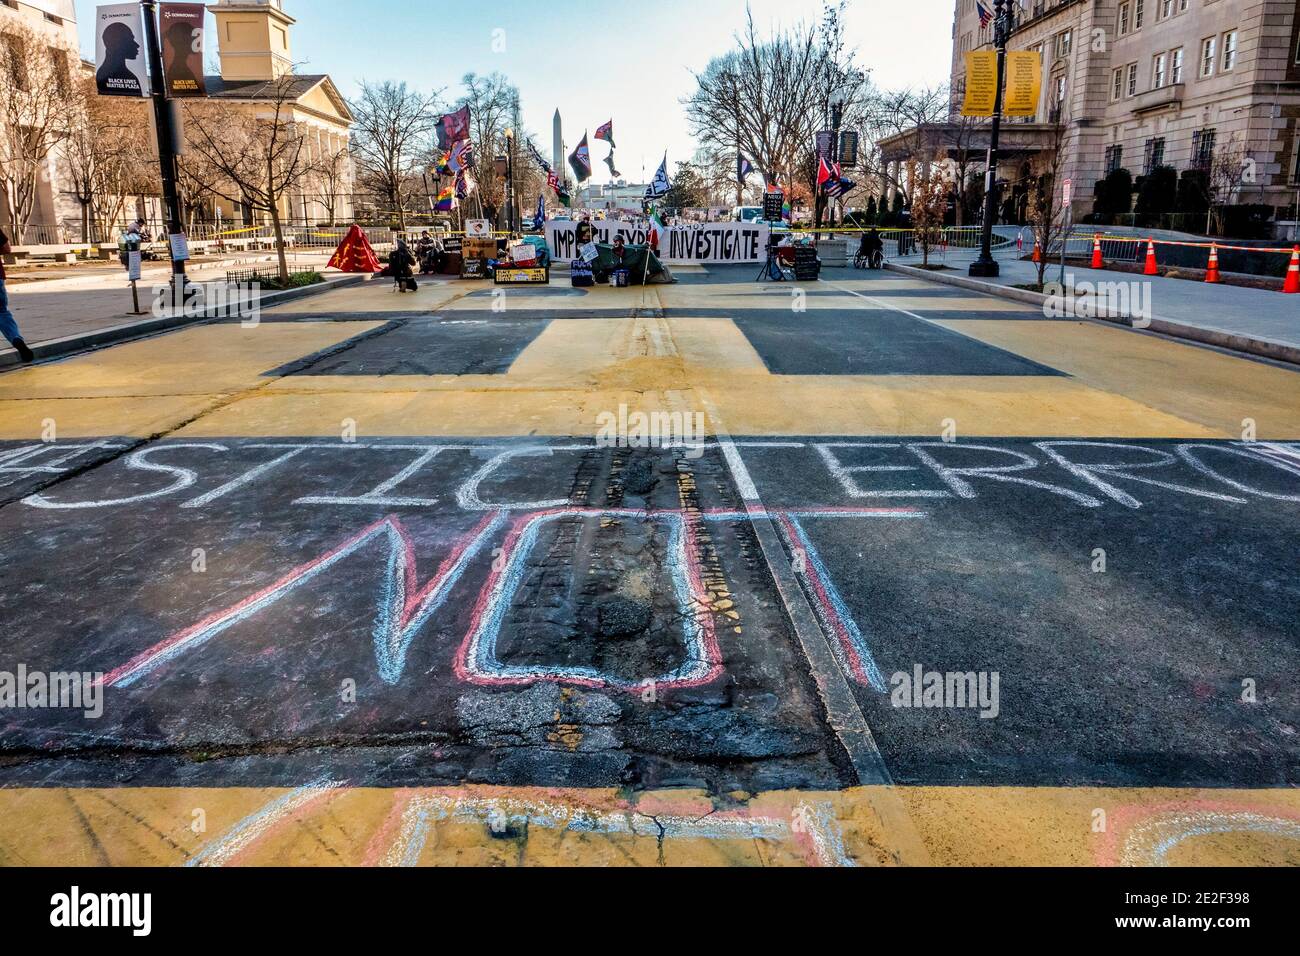 Black Lives Matter Plazal in locked down Washington D.C. on January 13, 2021. Stock Photo